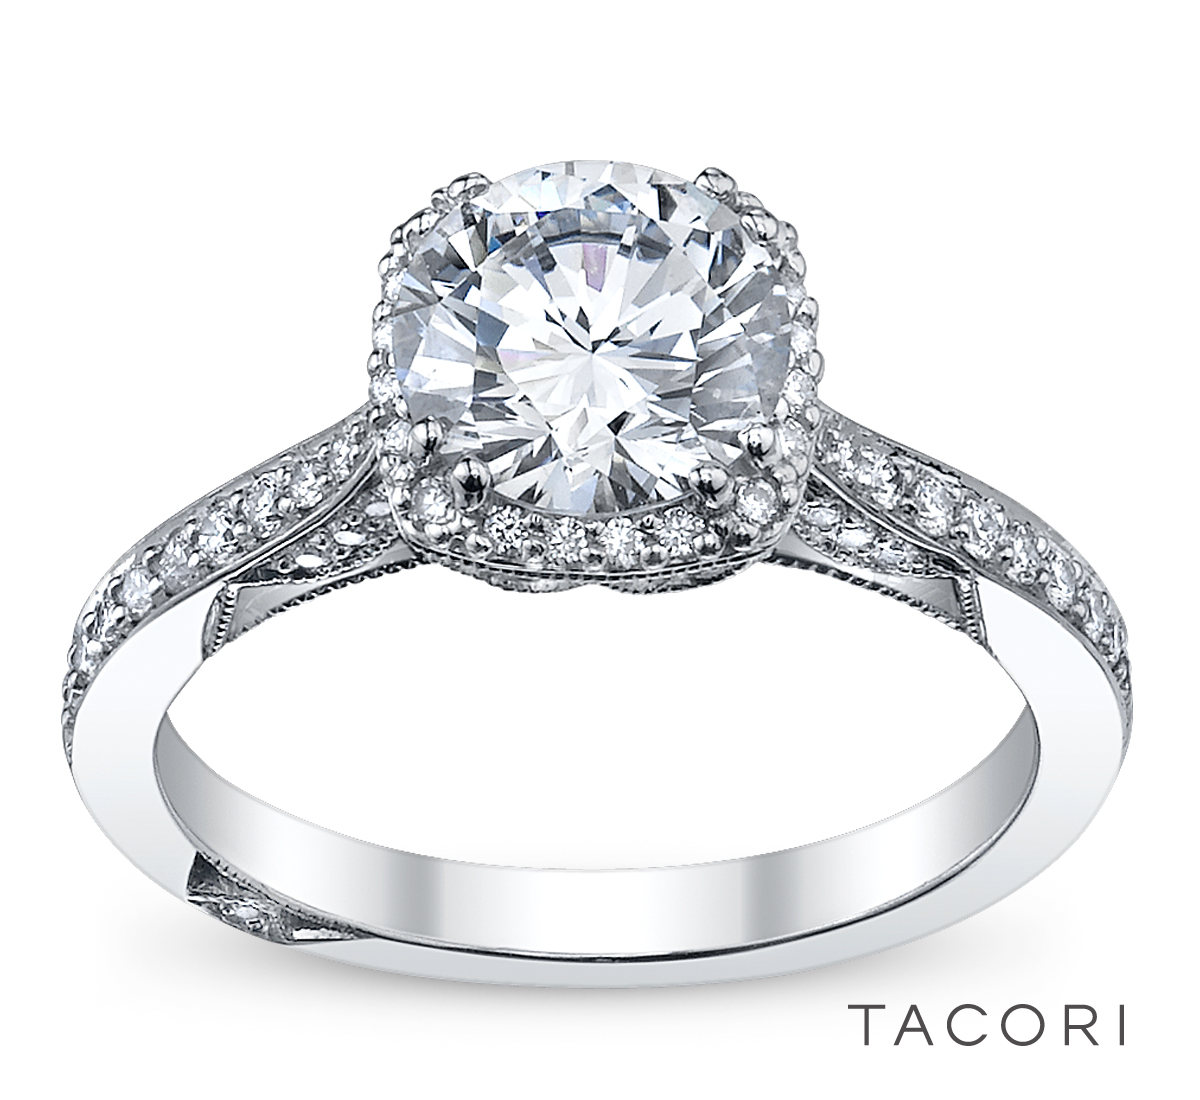 Beware of an Imitation Tacori Engagement Ring